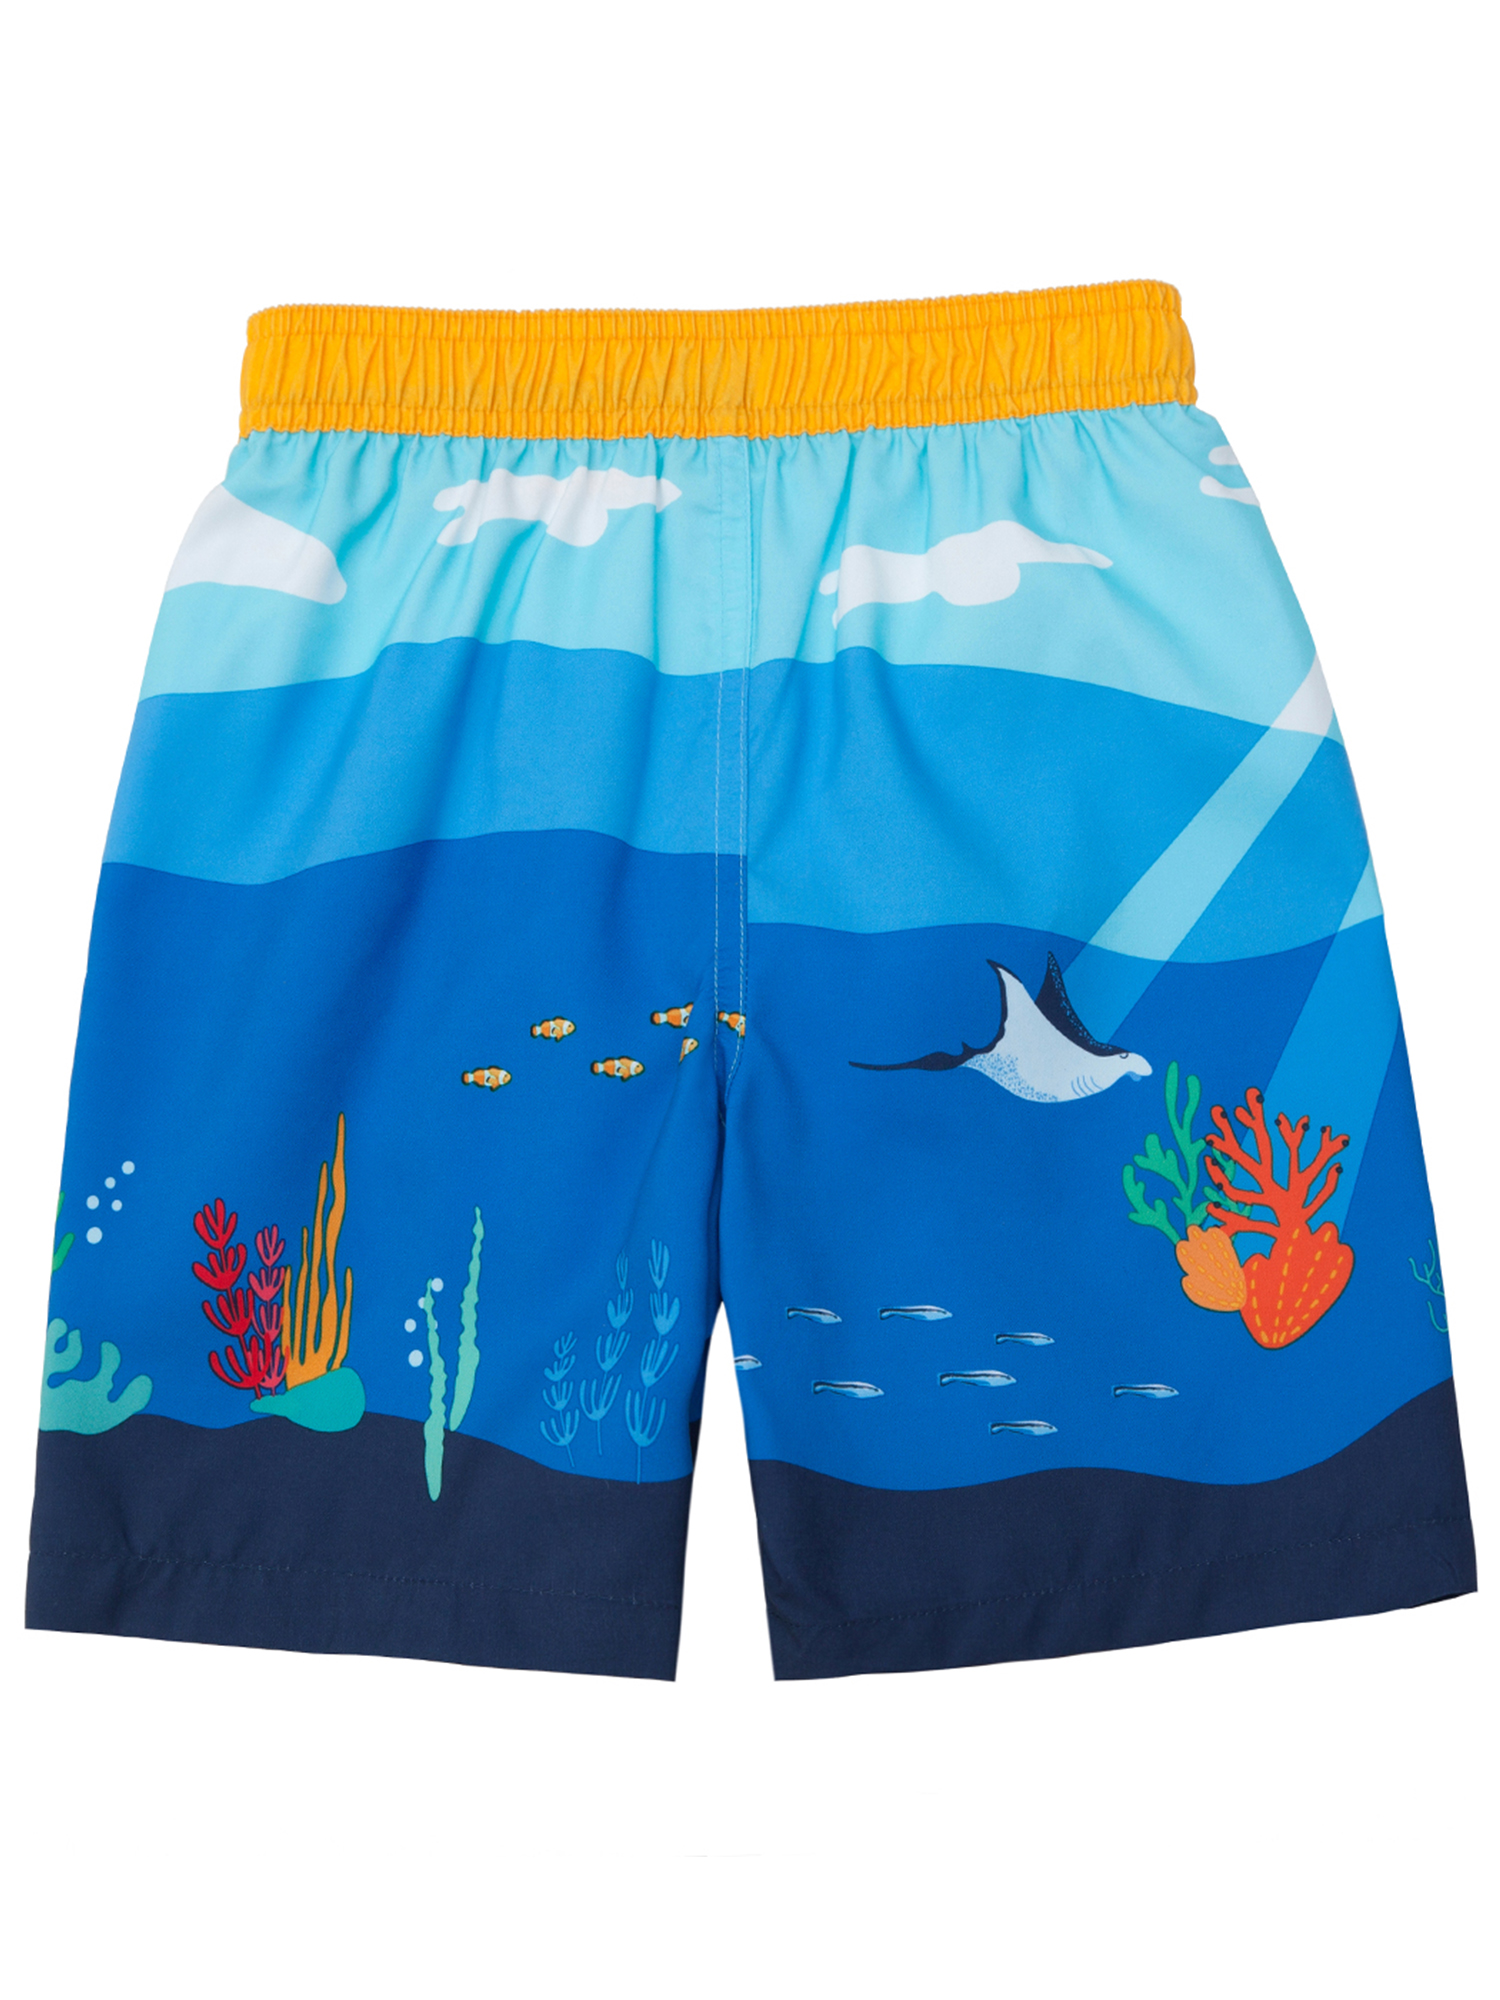 Rokka&Rolla Toddler Boys' Swim Trunks with Mesh Liner Baby Swimwear, UPF 50+ Sizes 2T-5T - image 3 of 6